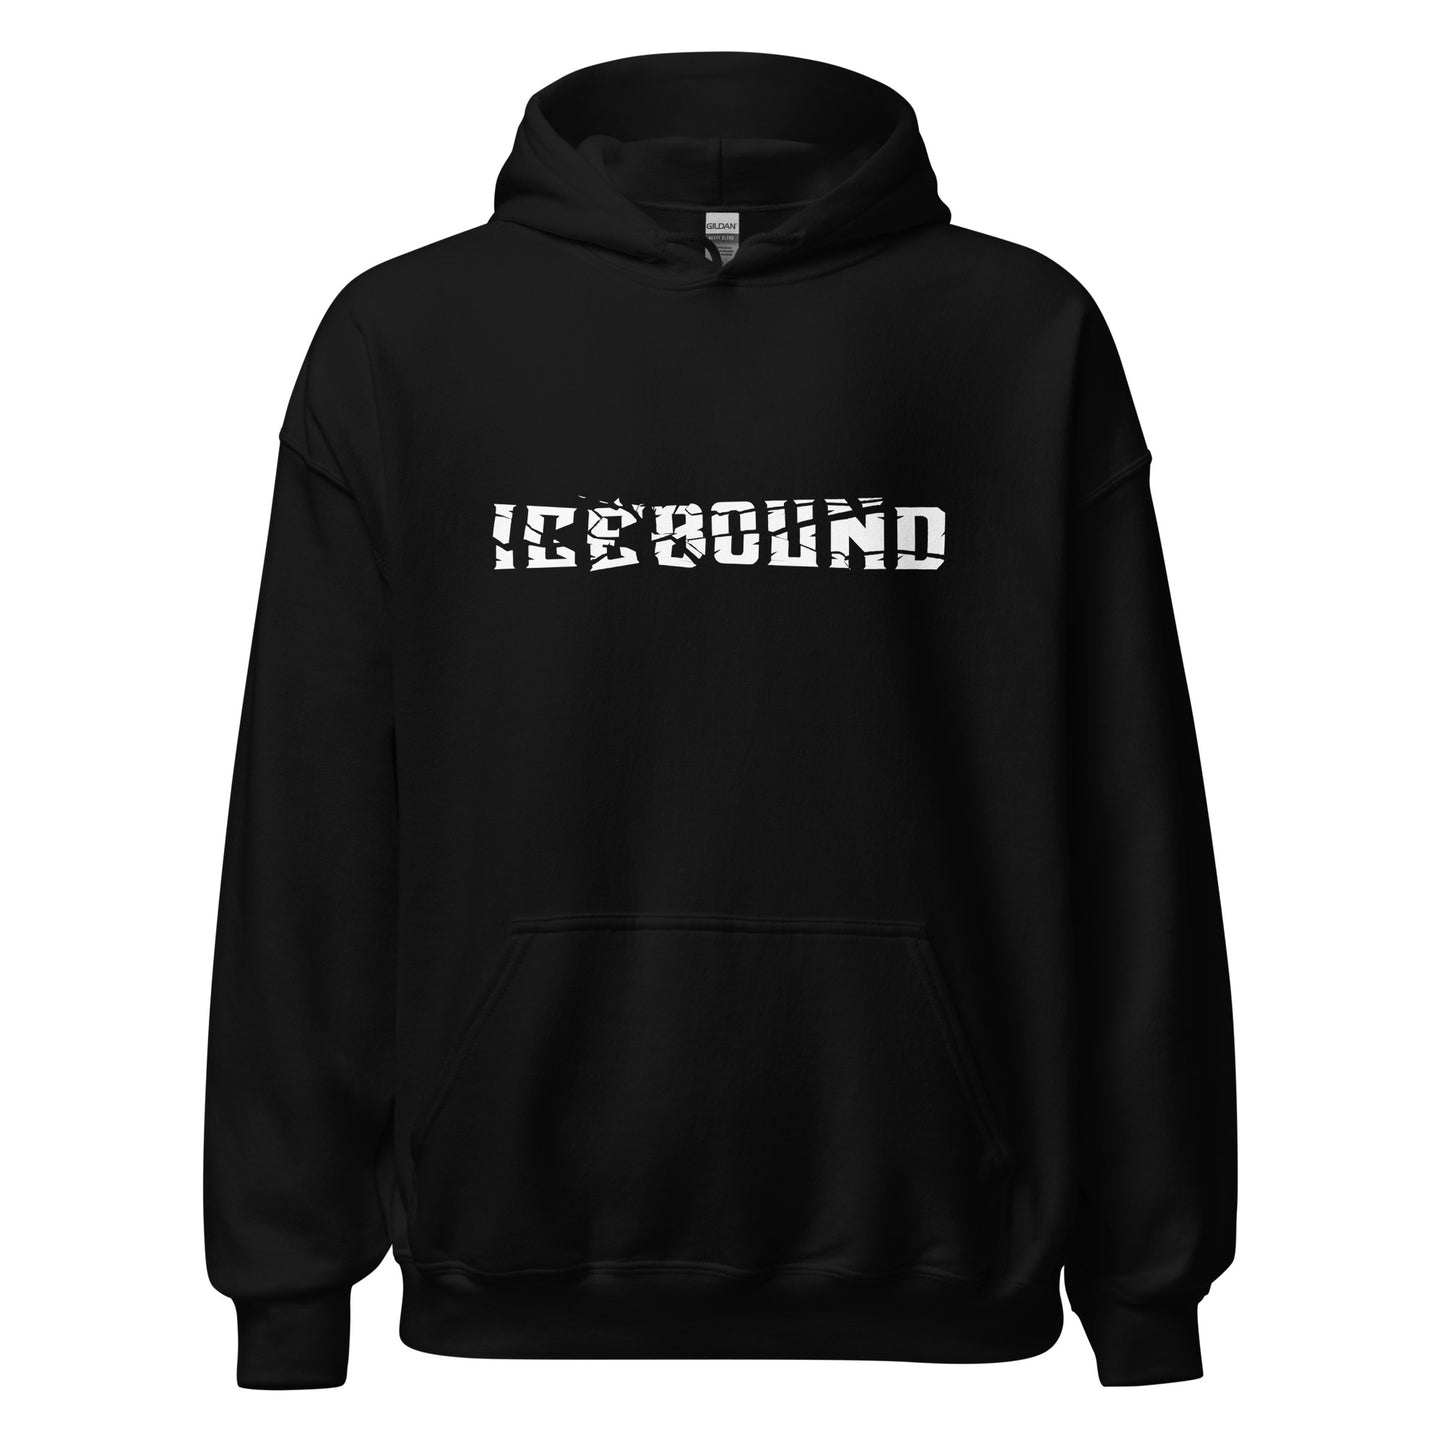 Icebound Logo - Hoodie